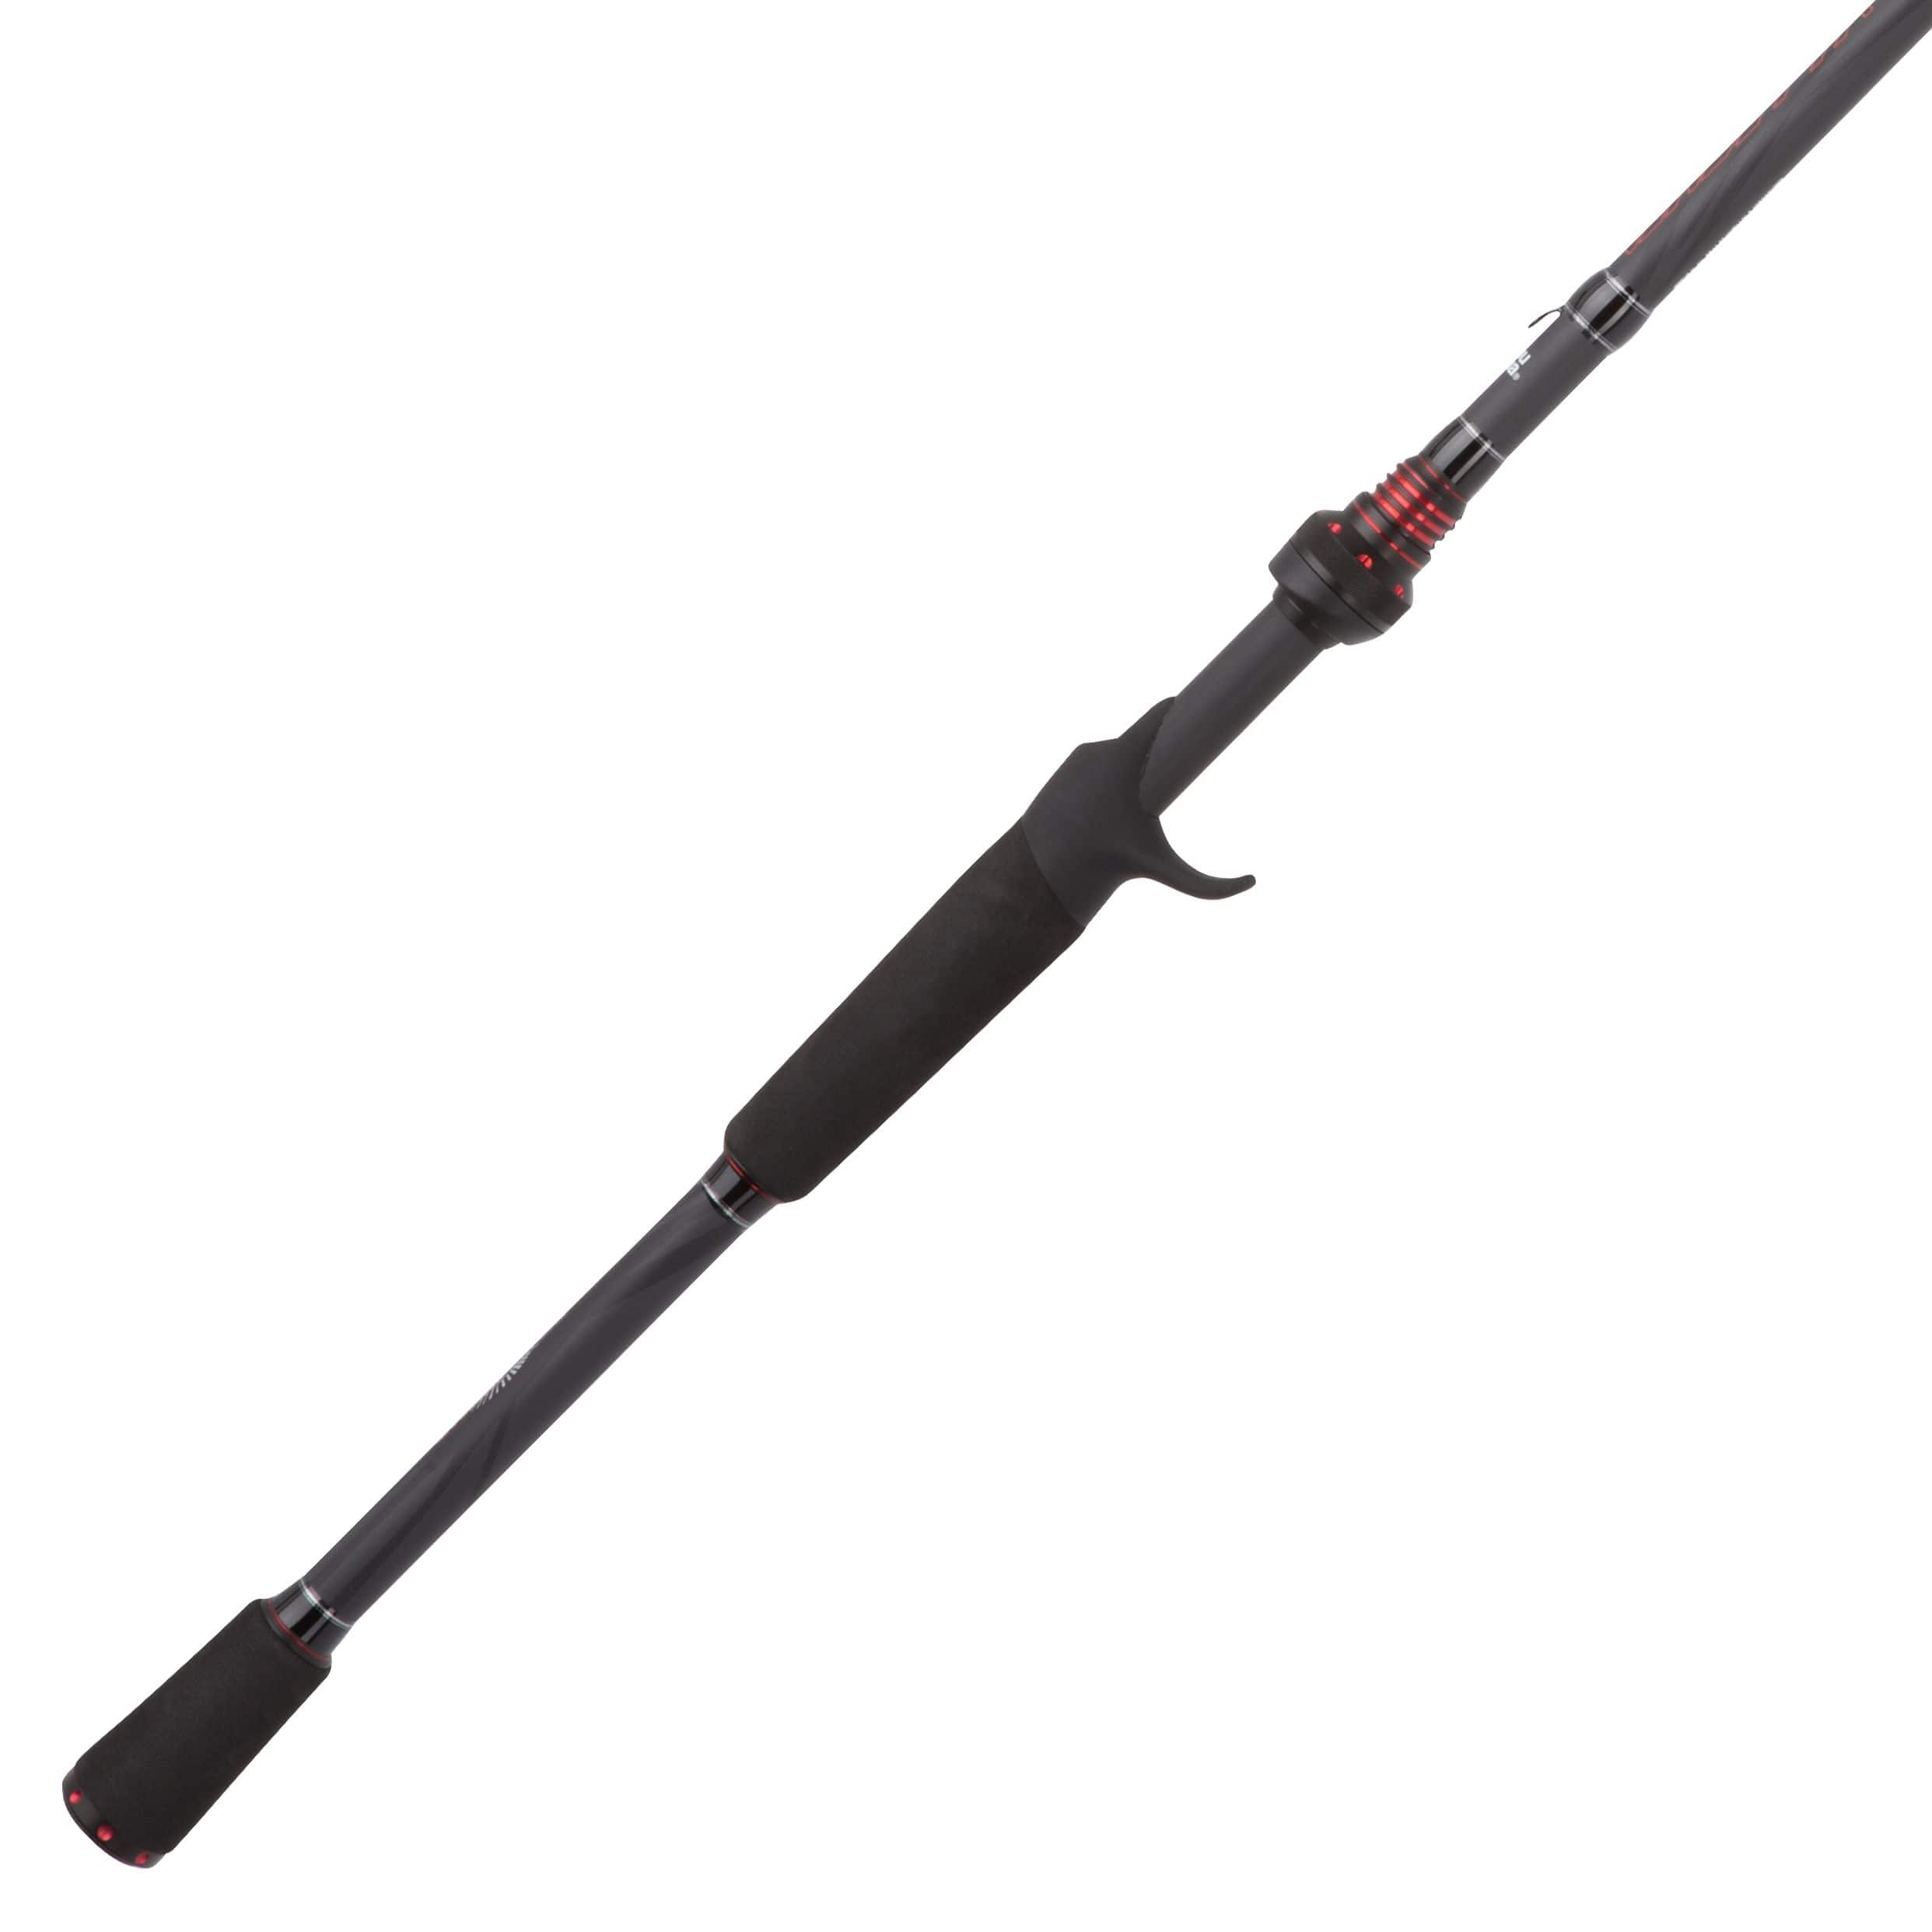 Abu Garcia 6'6” Vengeance Spinning Fishing Rod, 2 Piece Rod